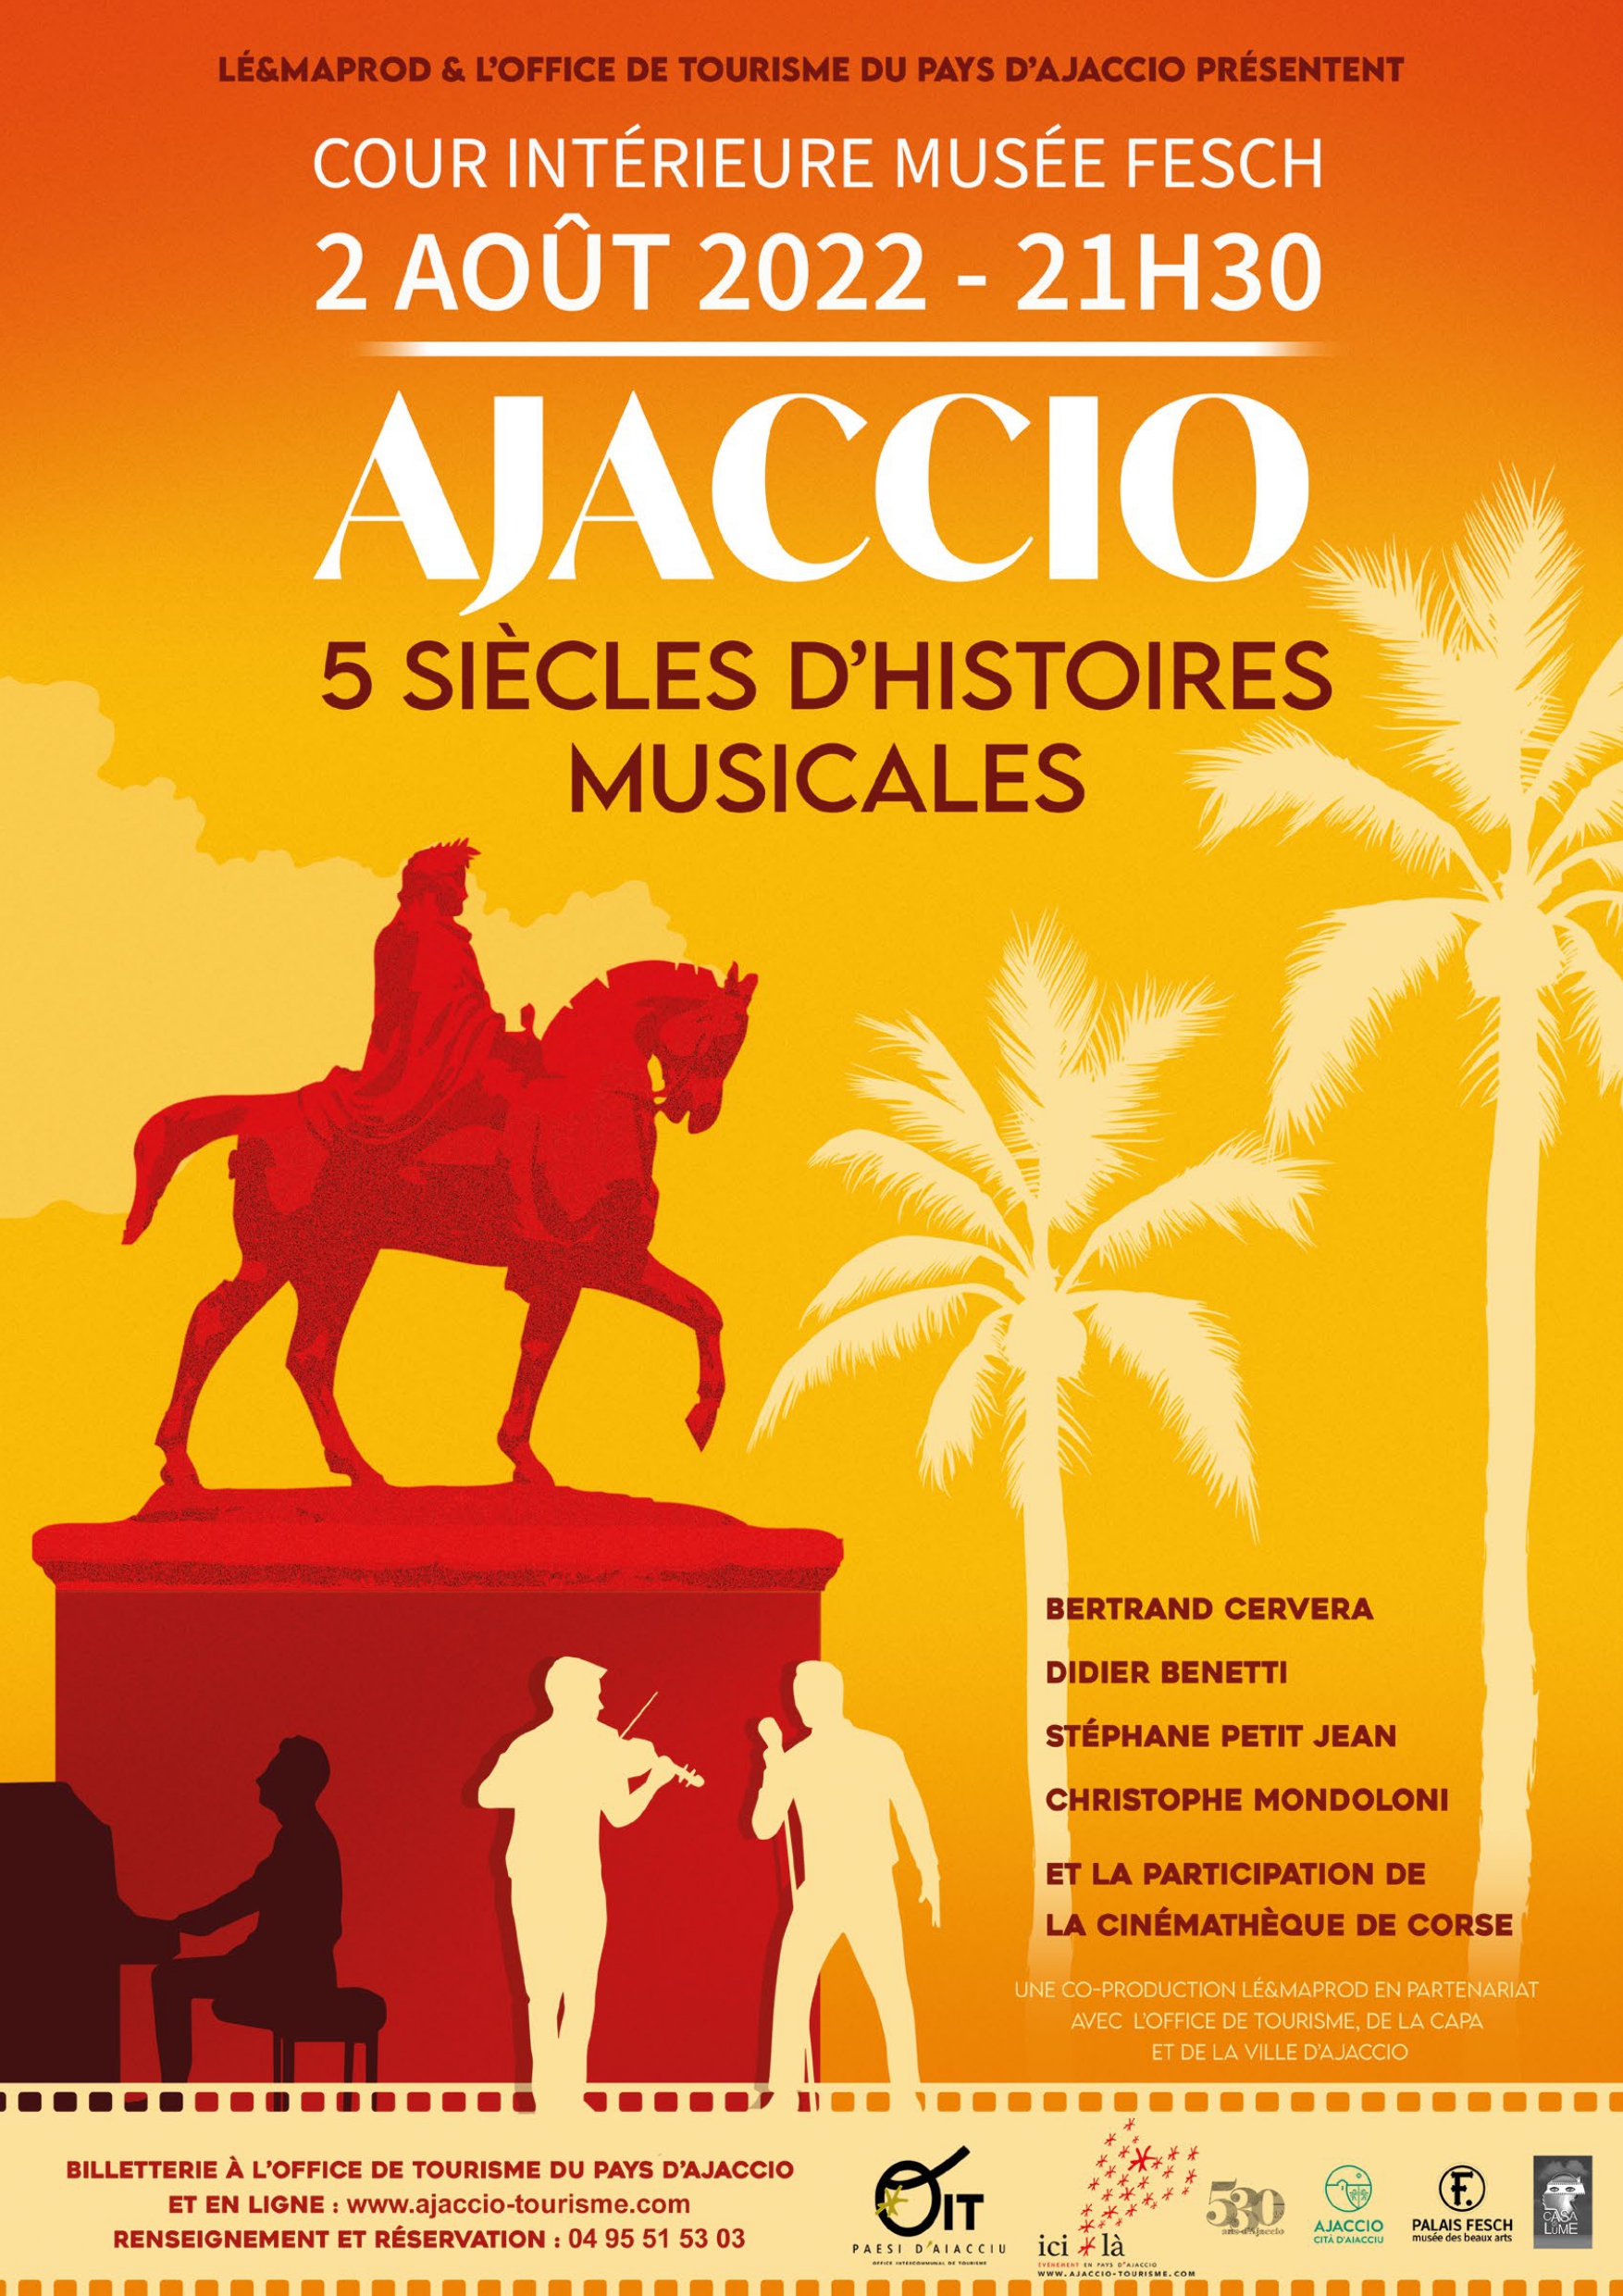 Ajaccio, 5 siècles d'histoires musicales